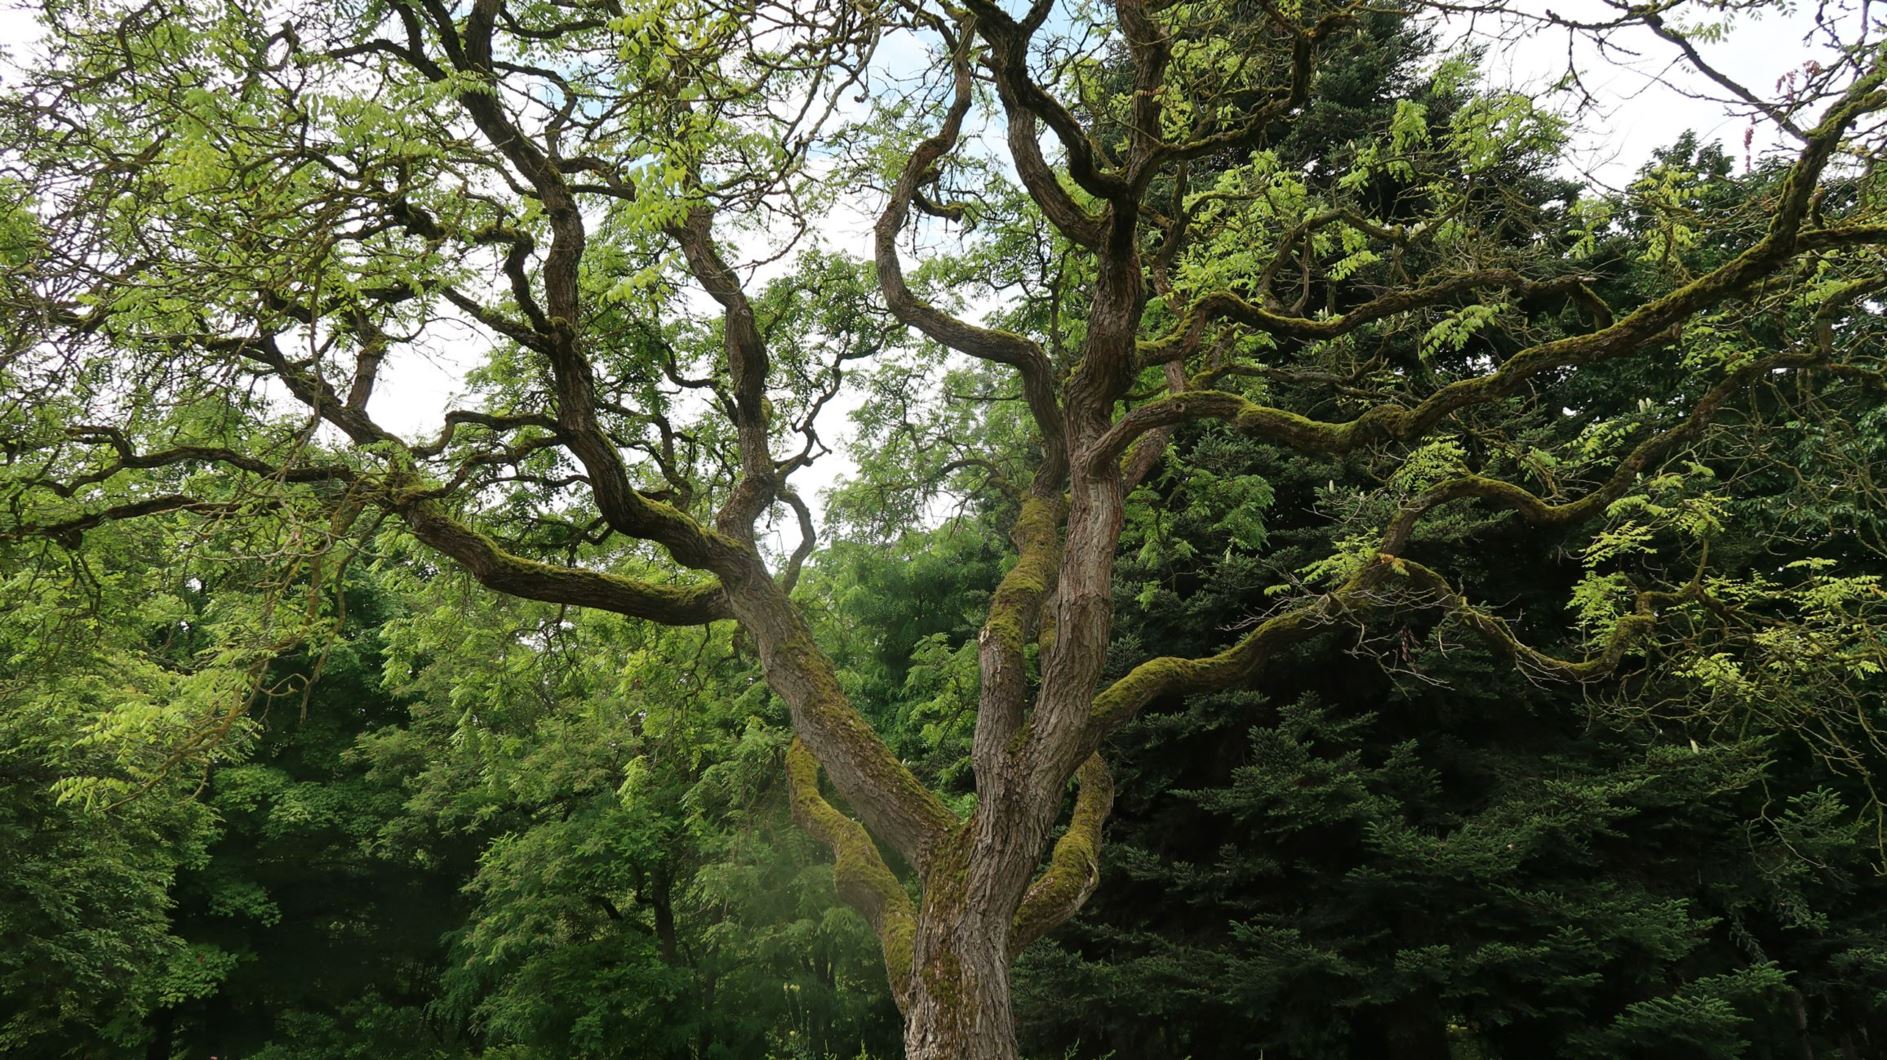 Koelreuteria paniculata - Rispiger Blasenbaum, goldenrain tree, pride of India